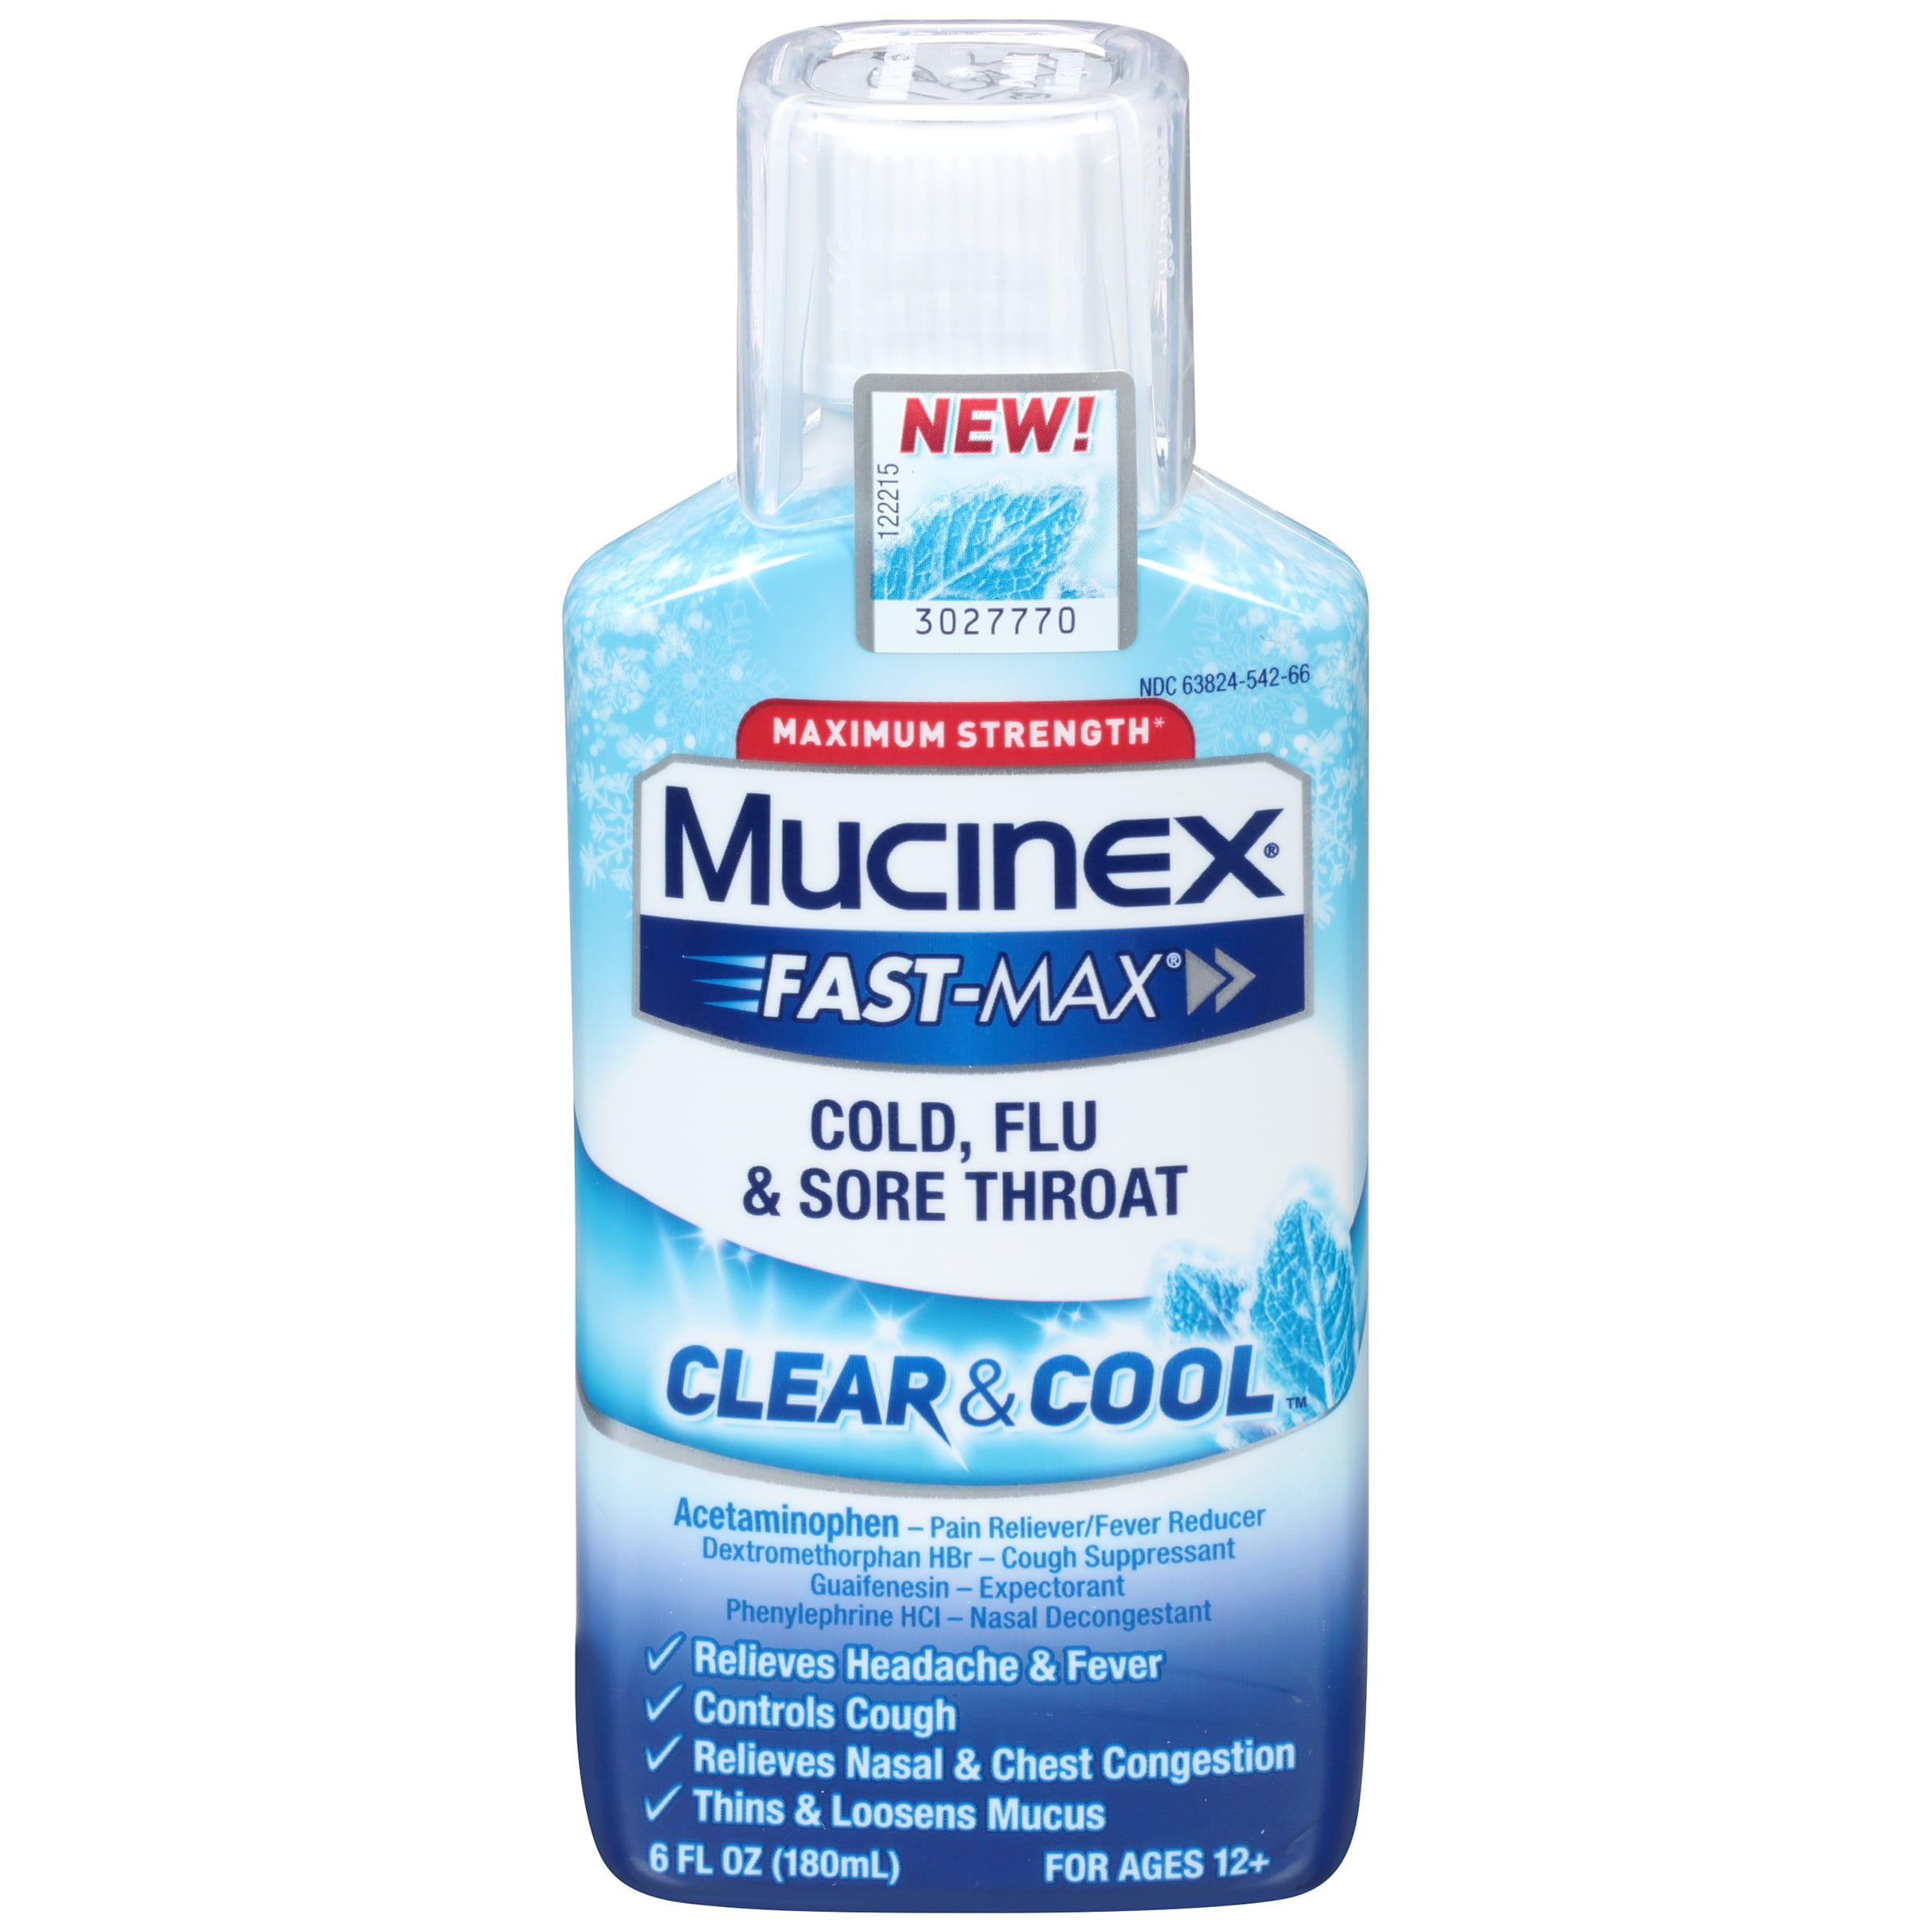 Clear cold. Maximum strength Mucinex fast Max. Max strength Mucinex. Mucinex Cold Flu. Mucinex Allergy.